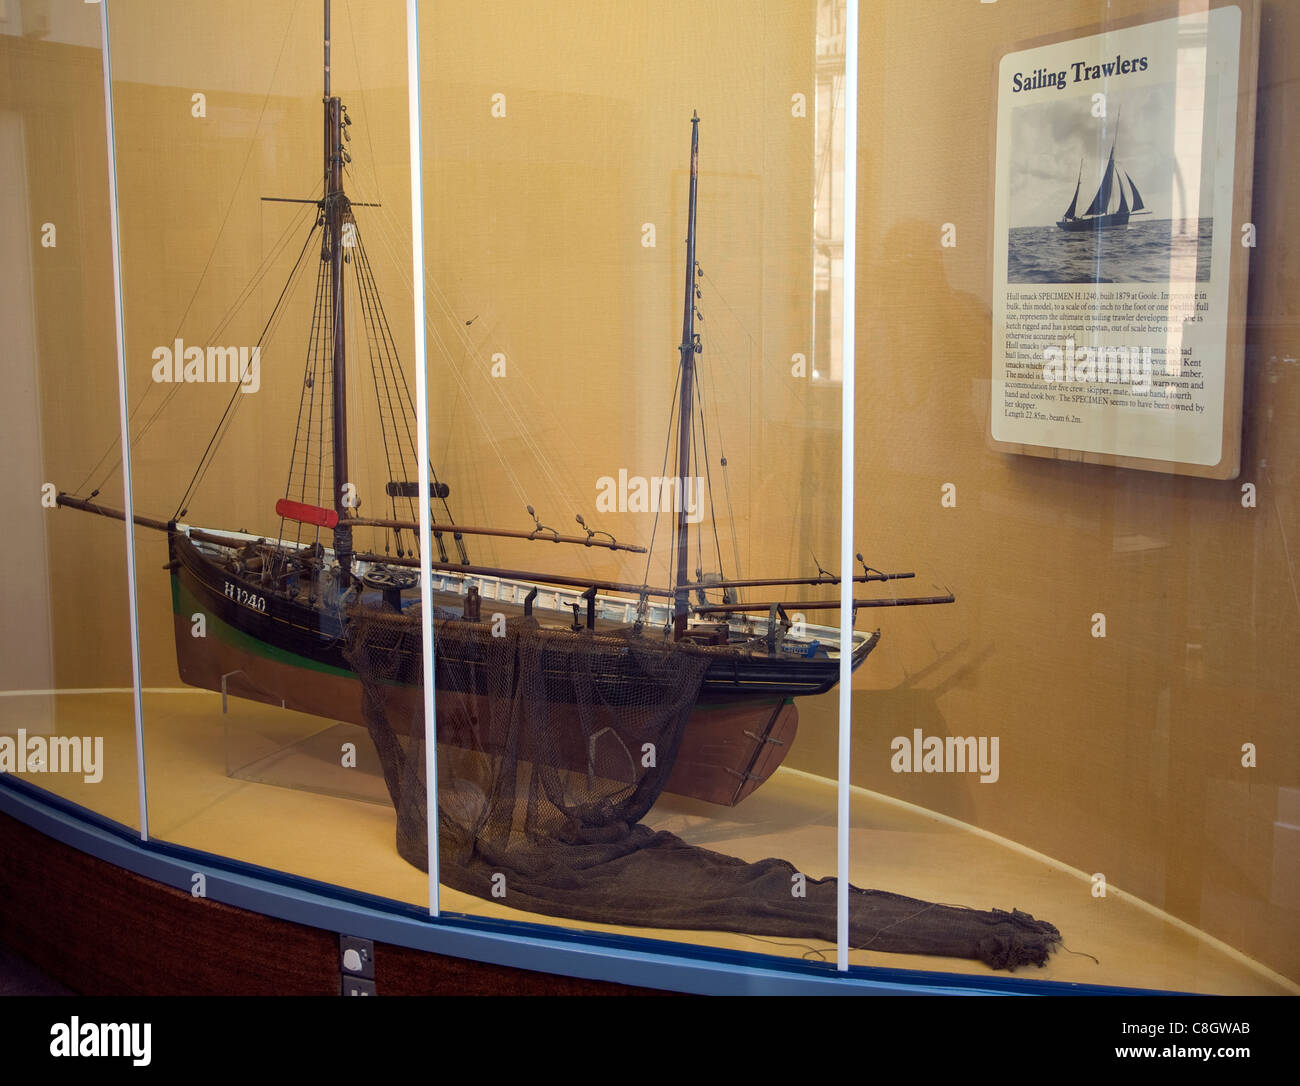 Sailing schooner model display cabinet Inside the Maritime museum, Hull, Yorkshire, England Stock Photo